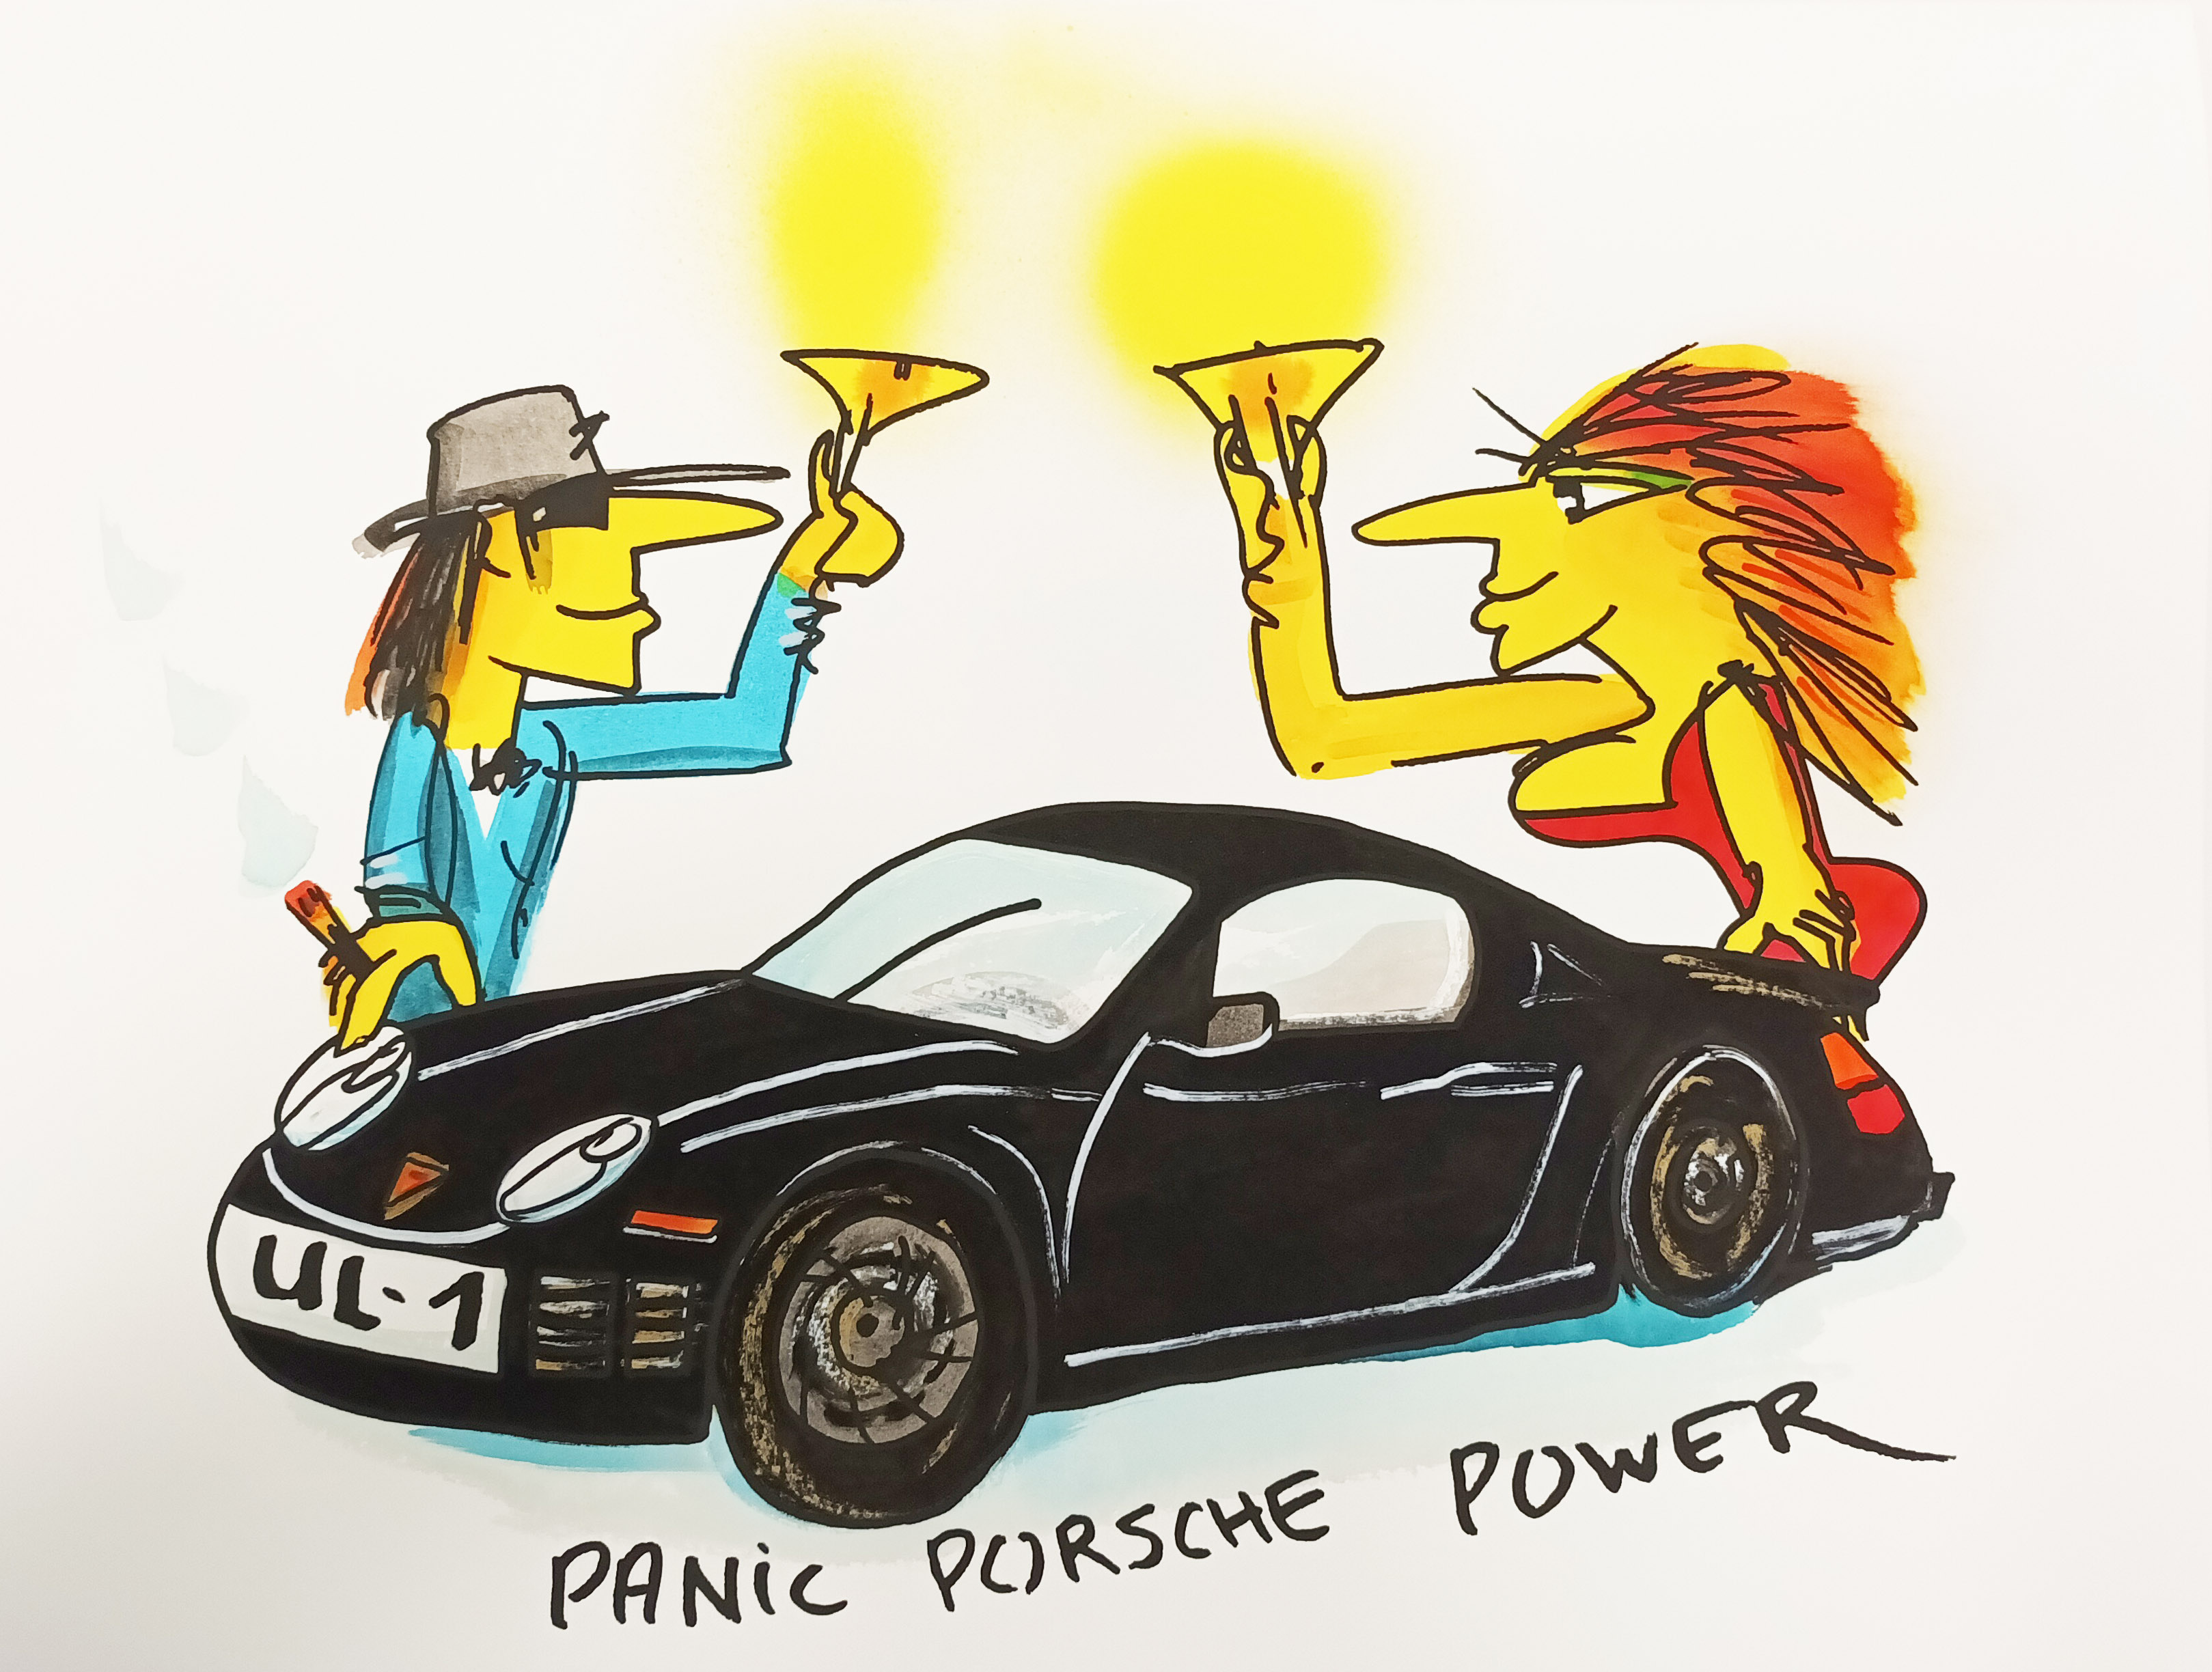 Panic Porsche Power (BLACK Edition) - Udo Lindenberg